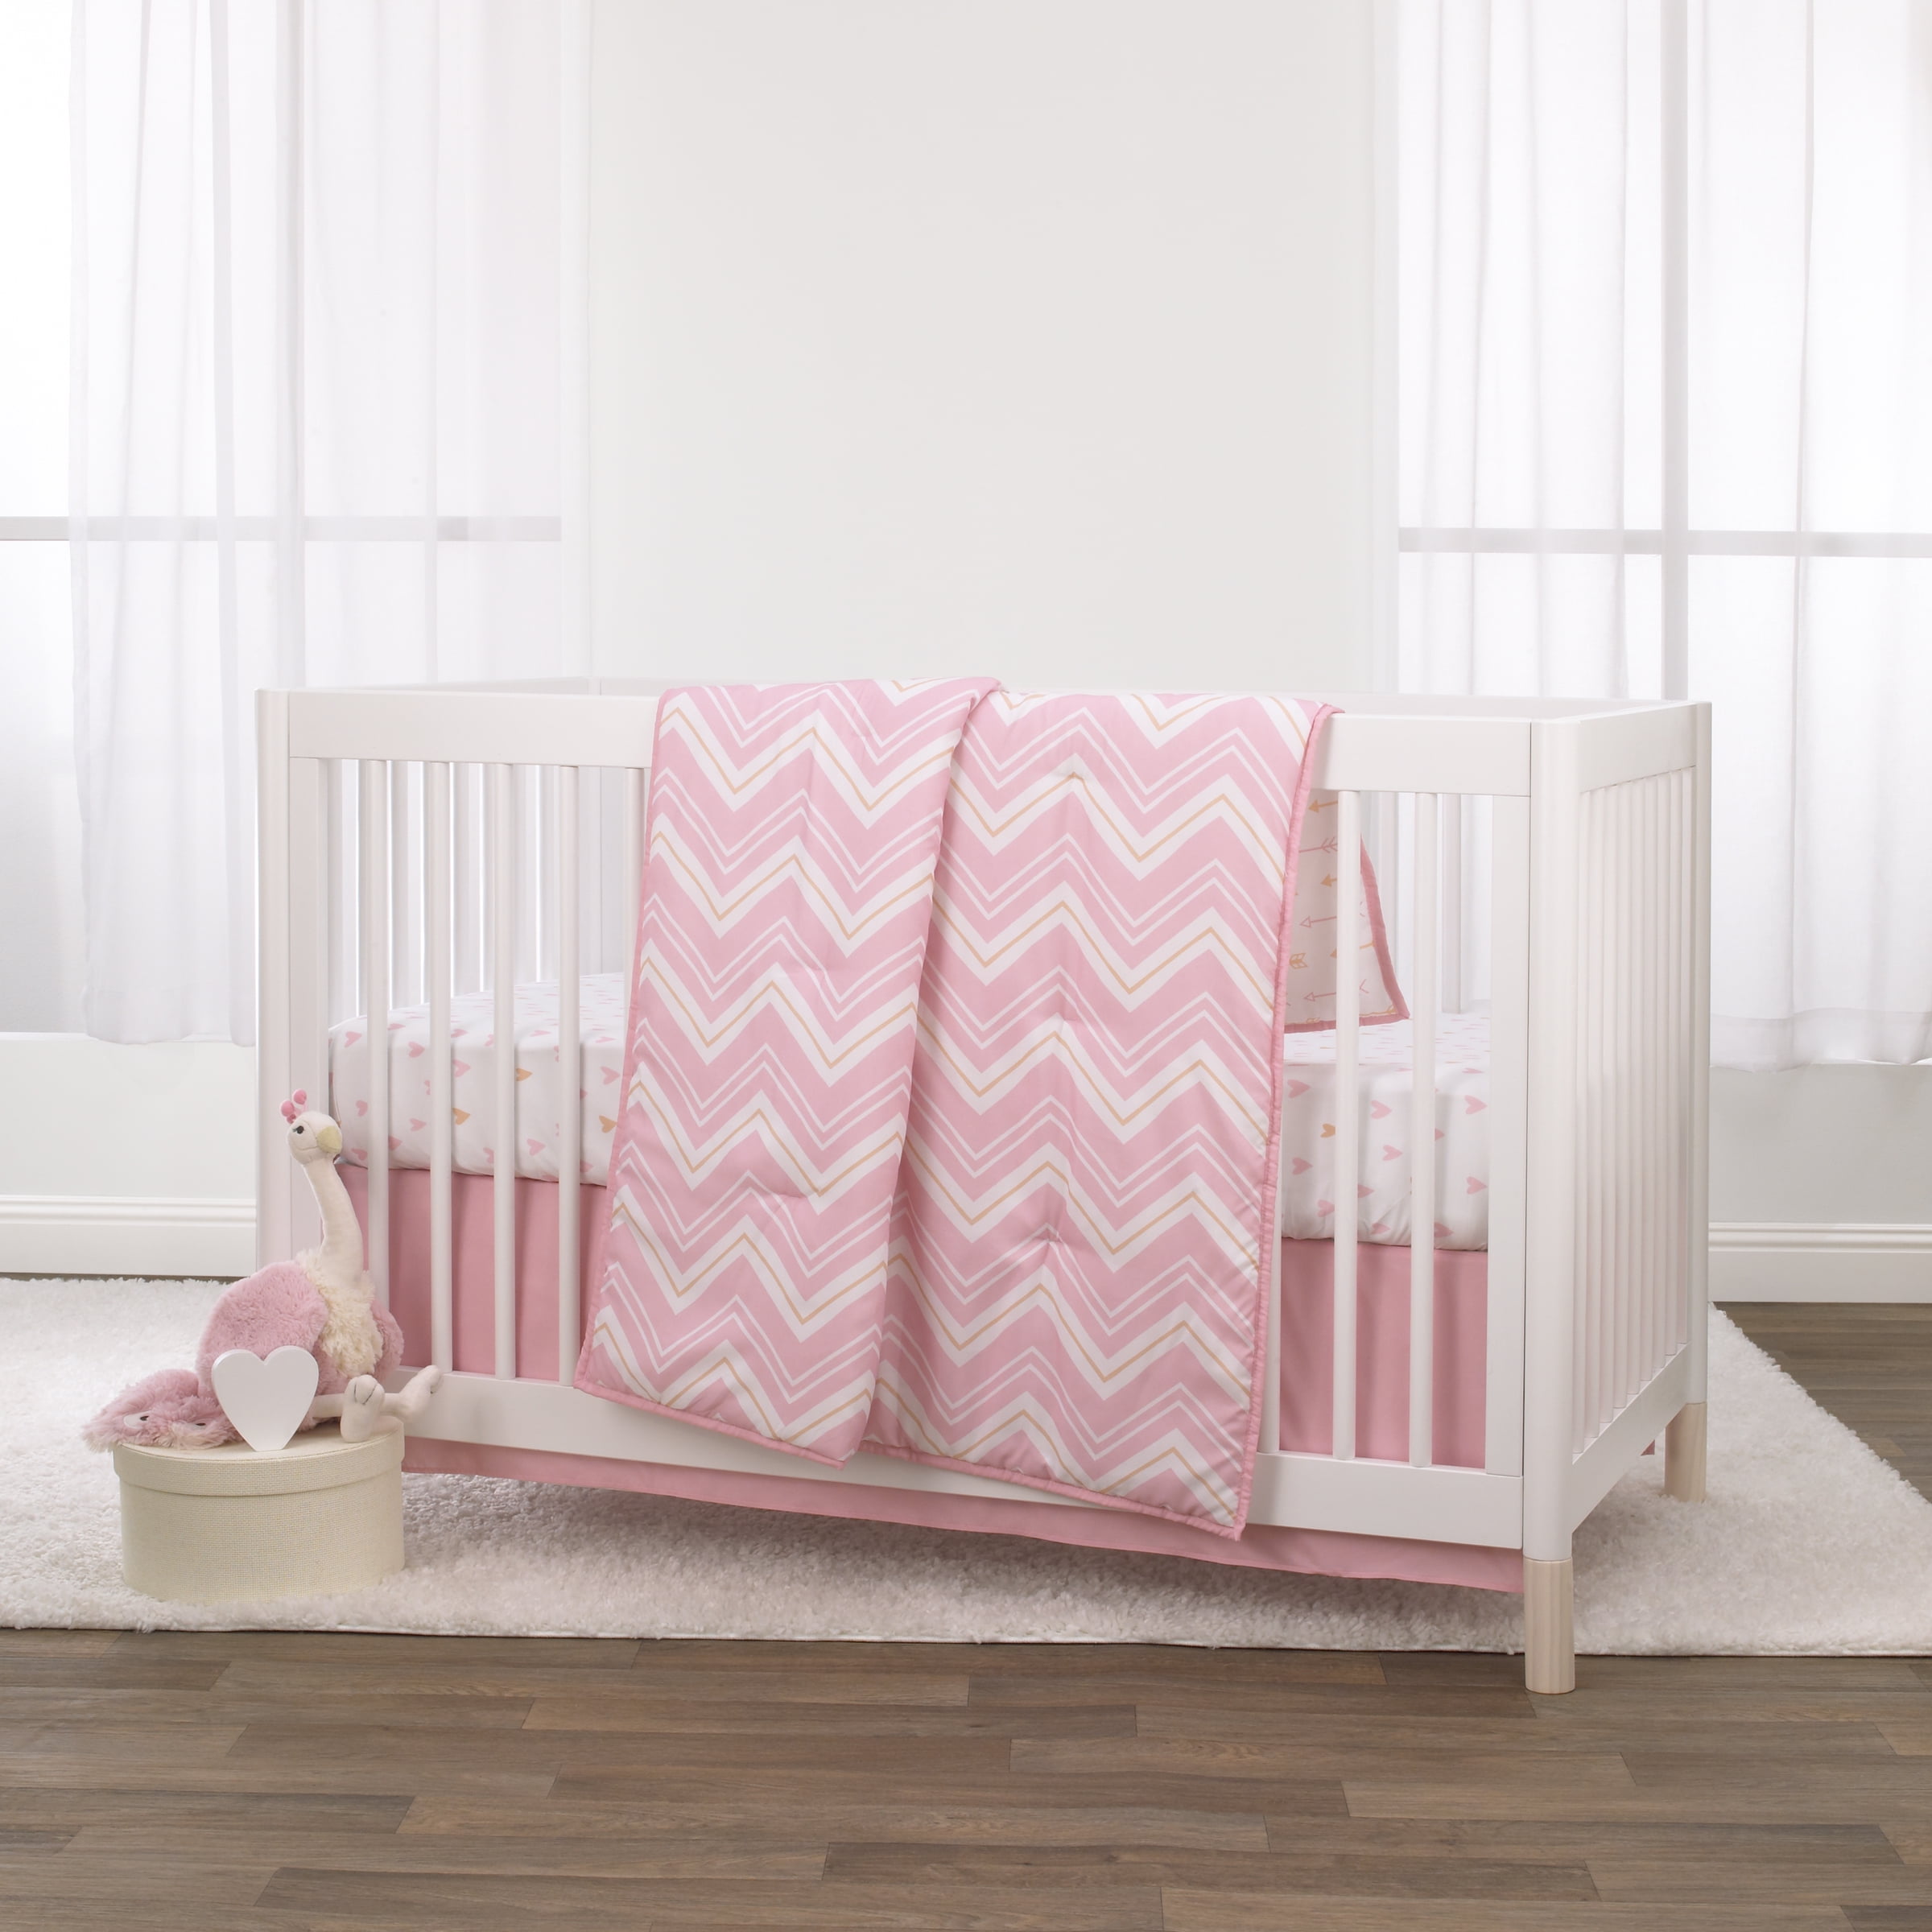 Luxury 12 Piece Nursery Bedding Set Fits Baby Cot Kids Cot Bed Love Heart 